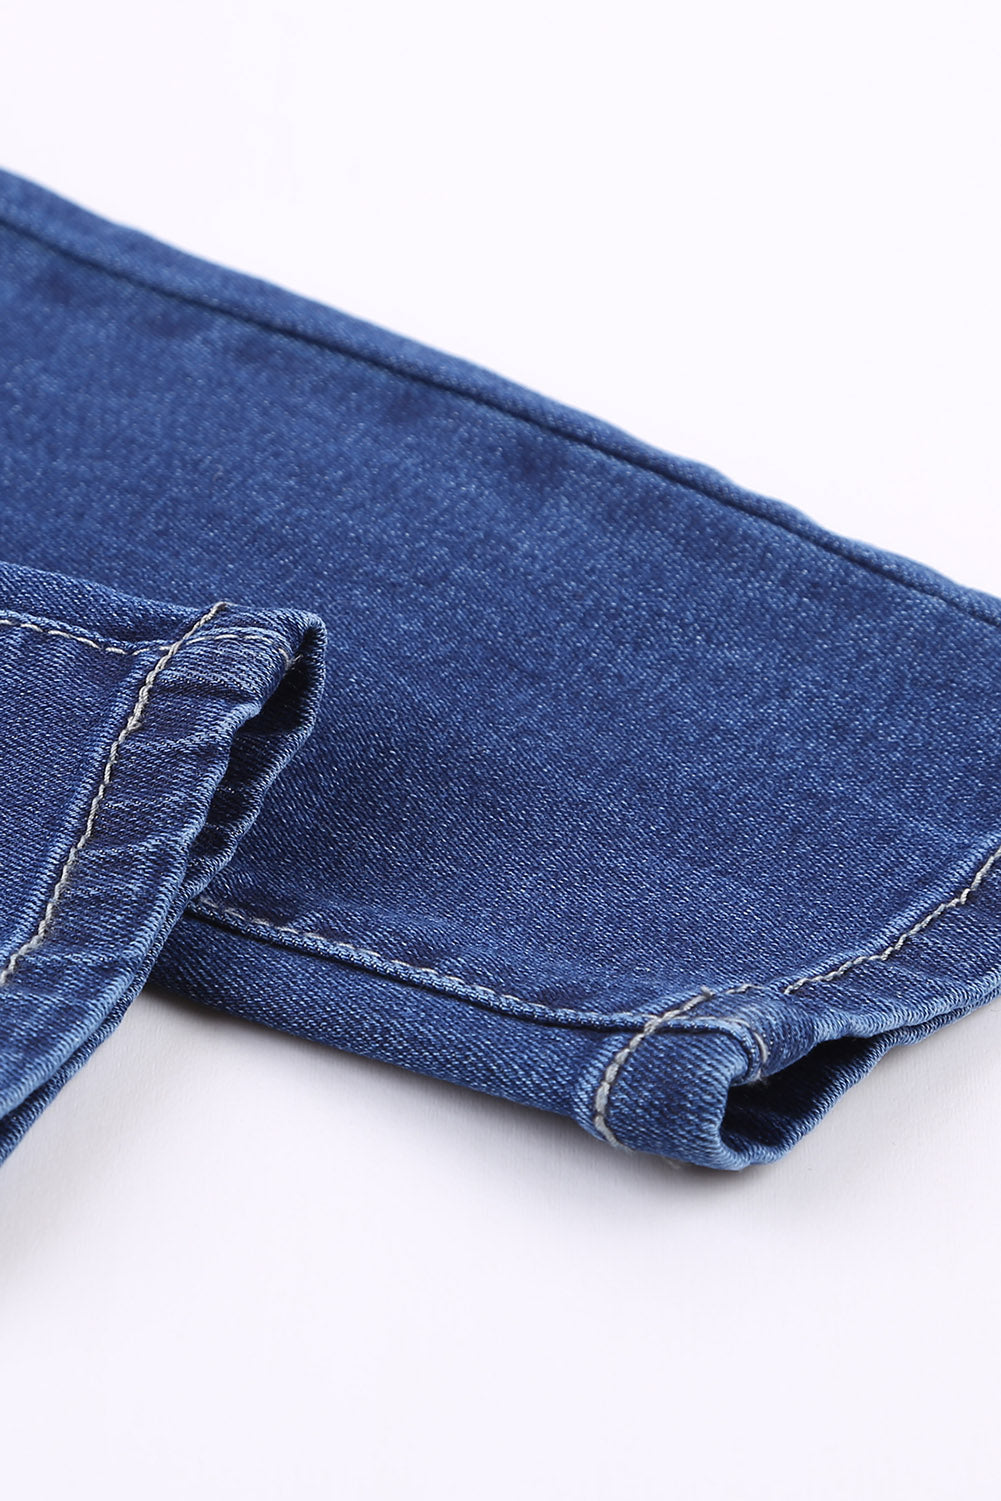 What You Want Button Fly Pocket Jeans - DromedarShop.com Online Boutique